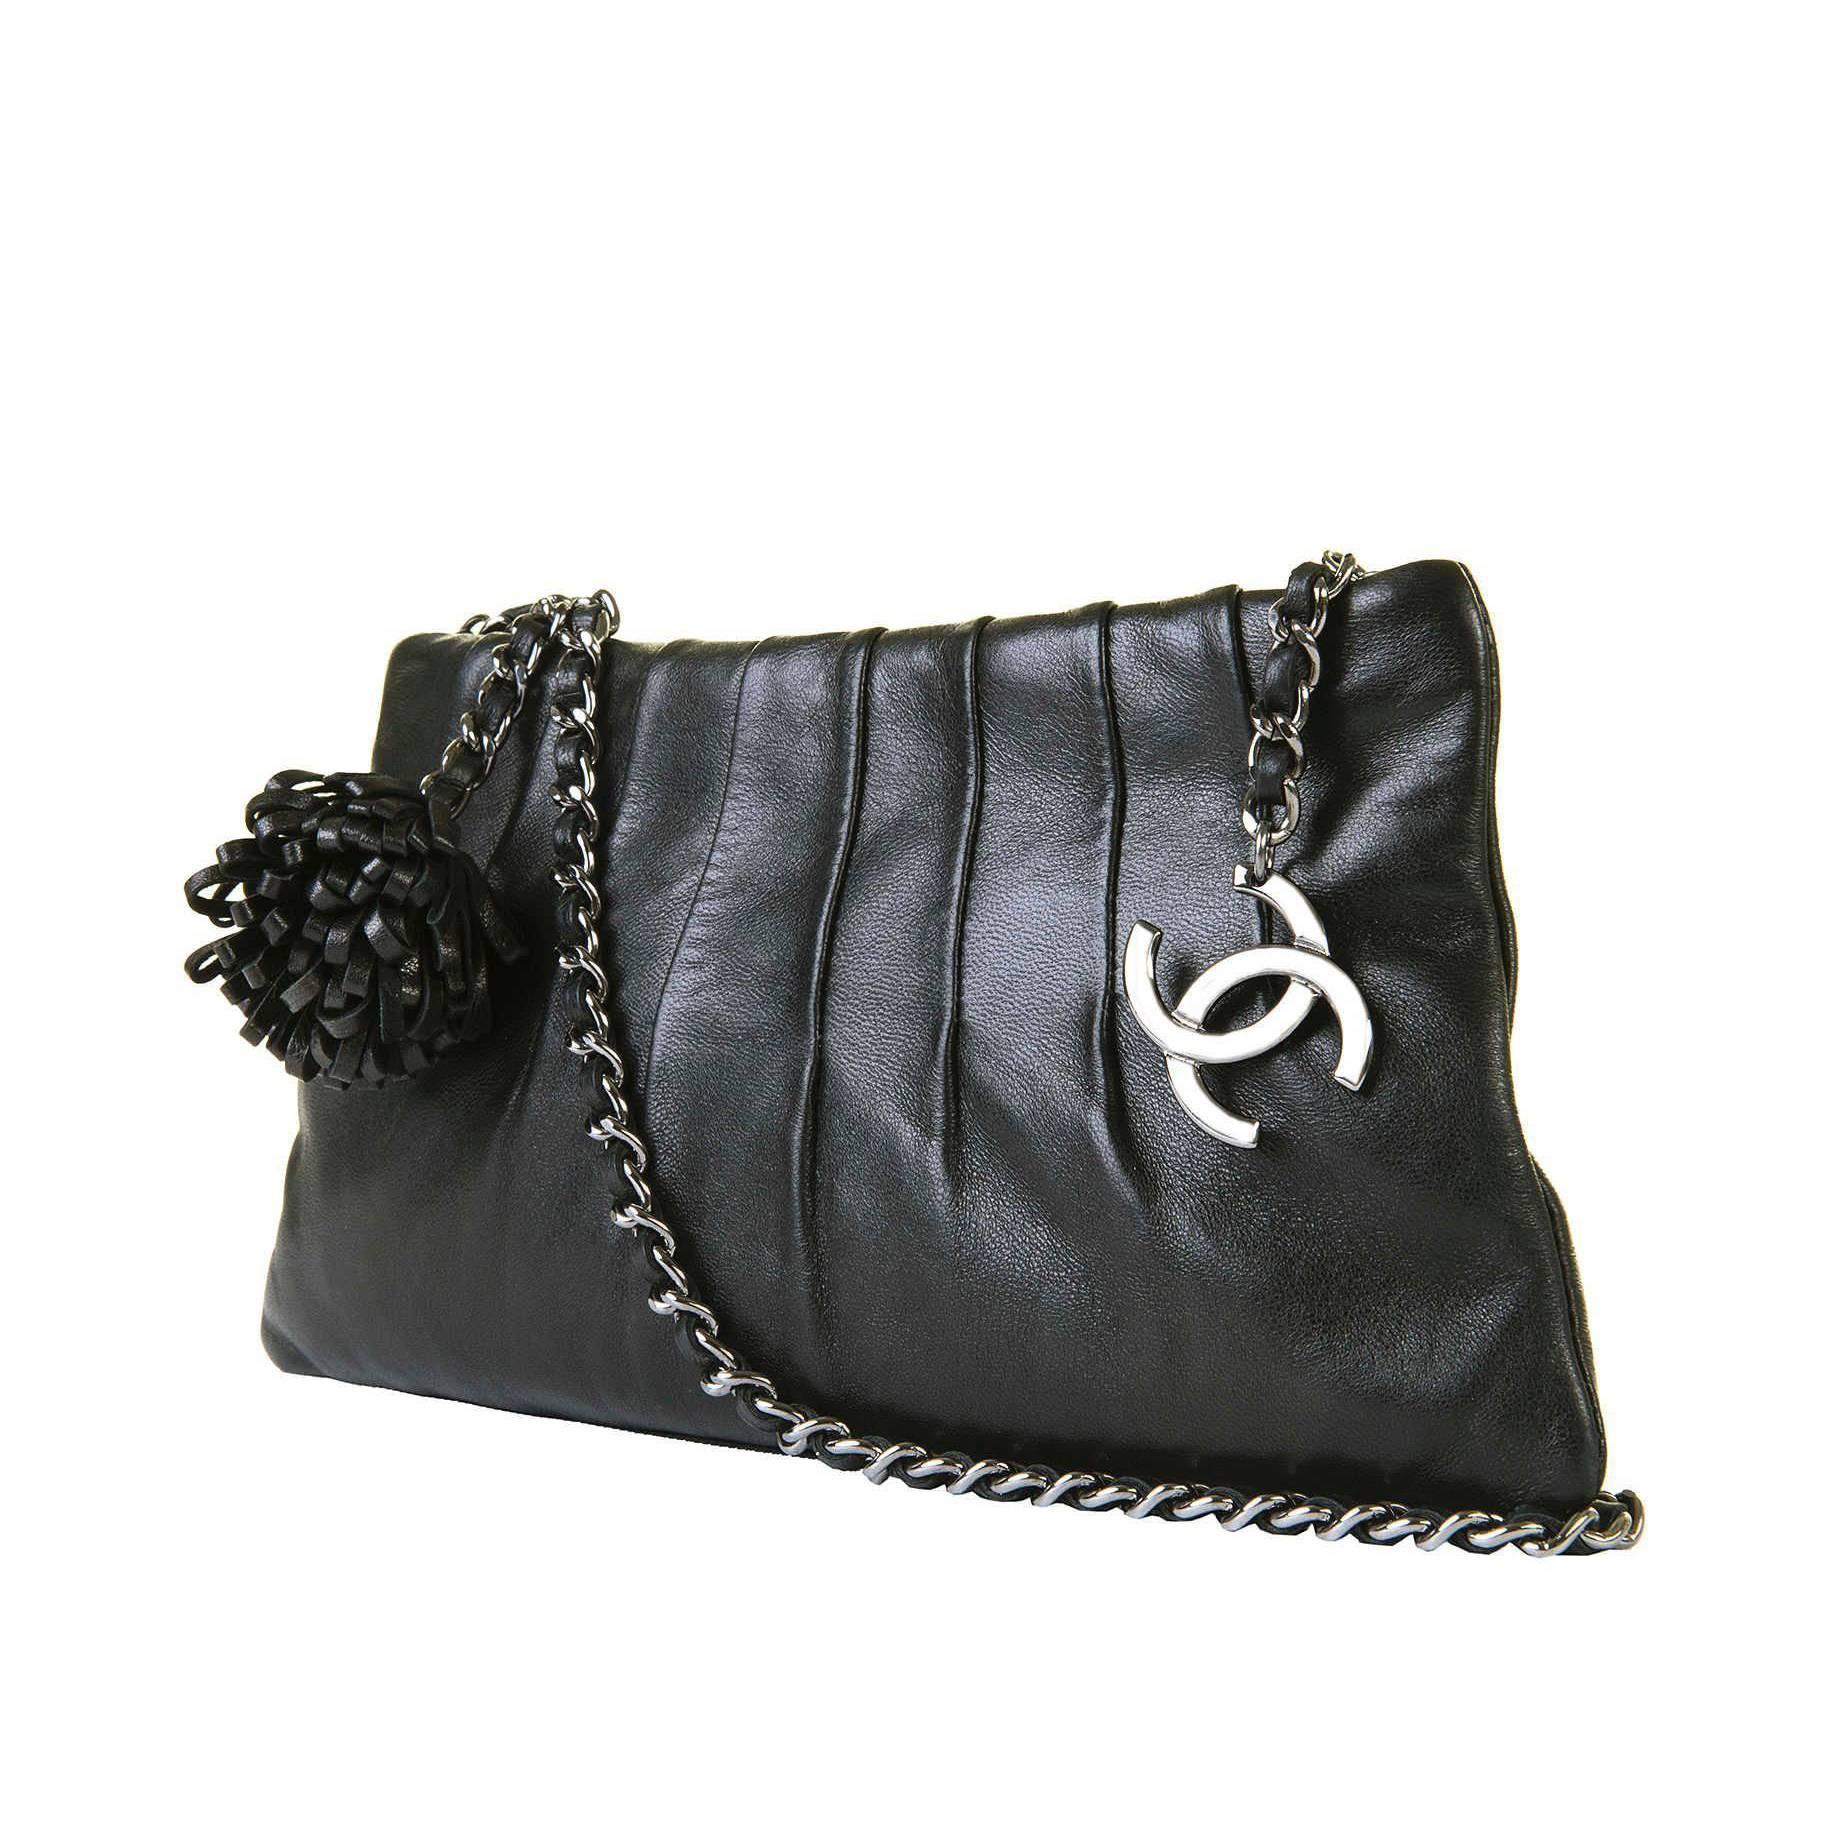 TRES CHIC Chanel Black Shoulder/ Clutch Bag with Silver Palladium Hardware